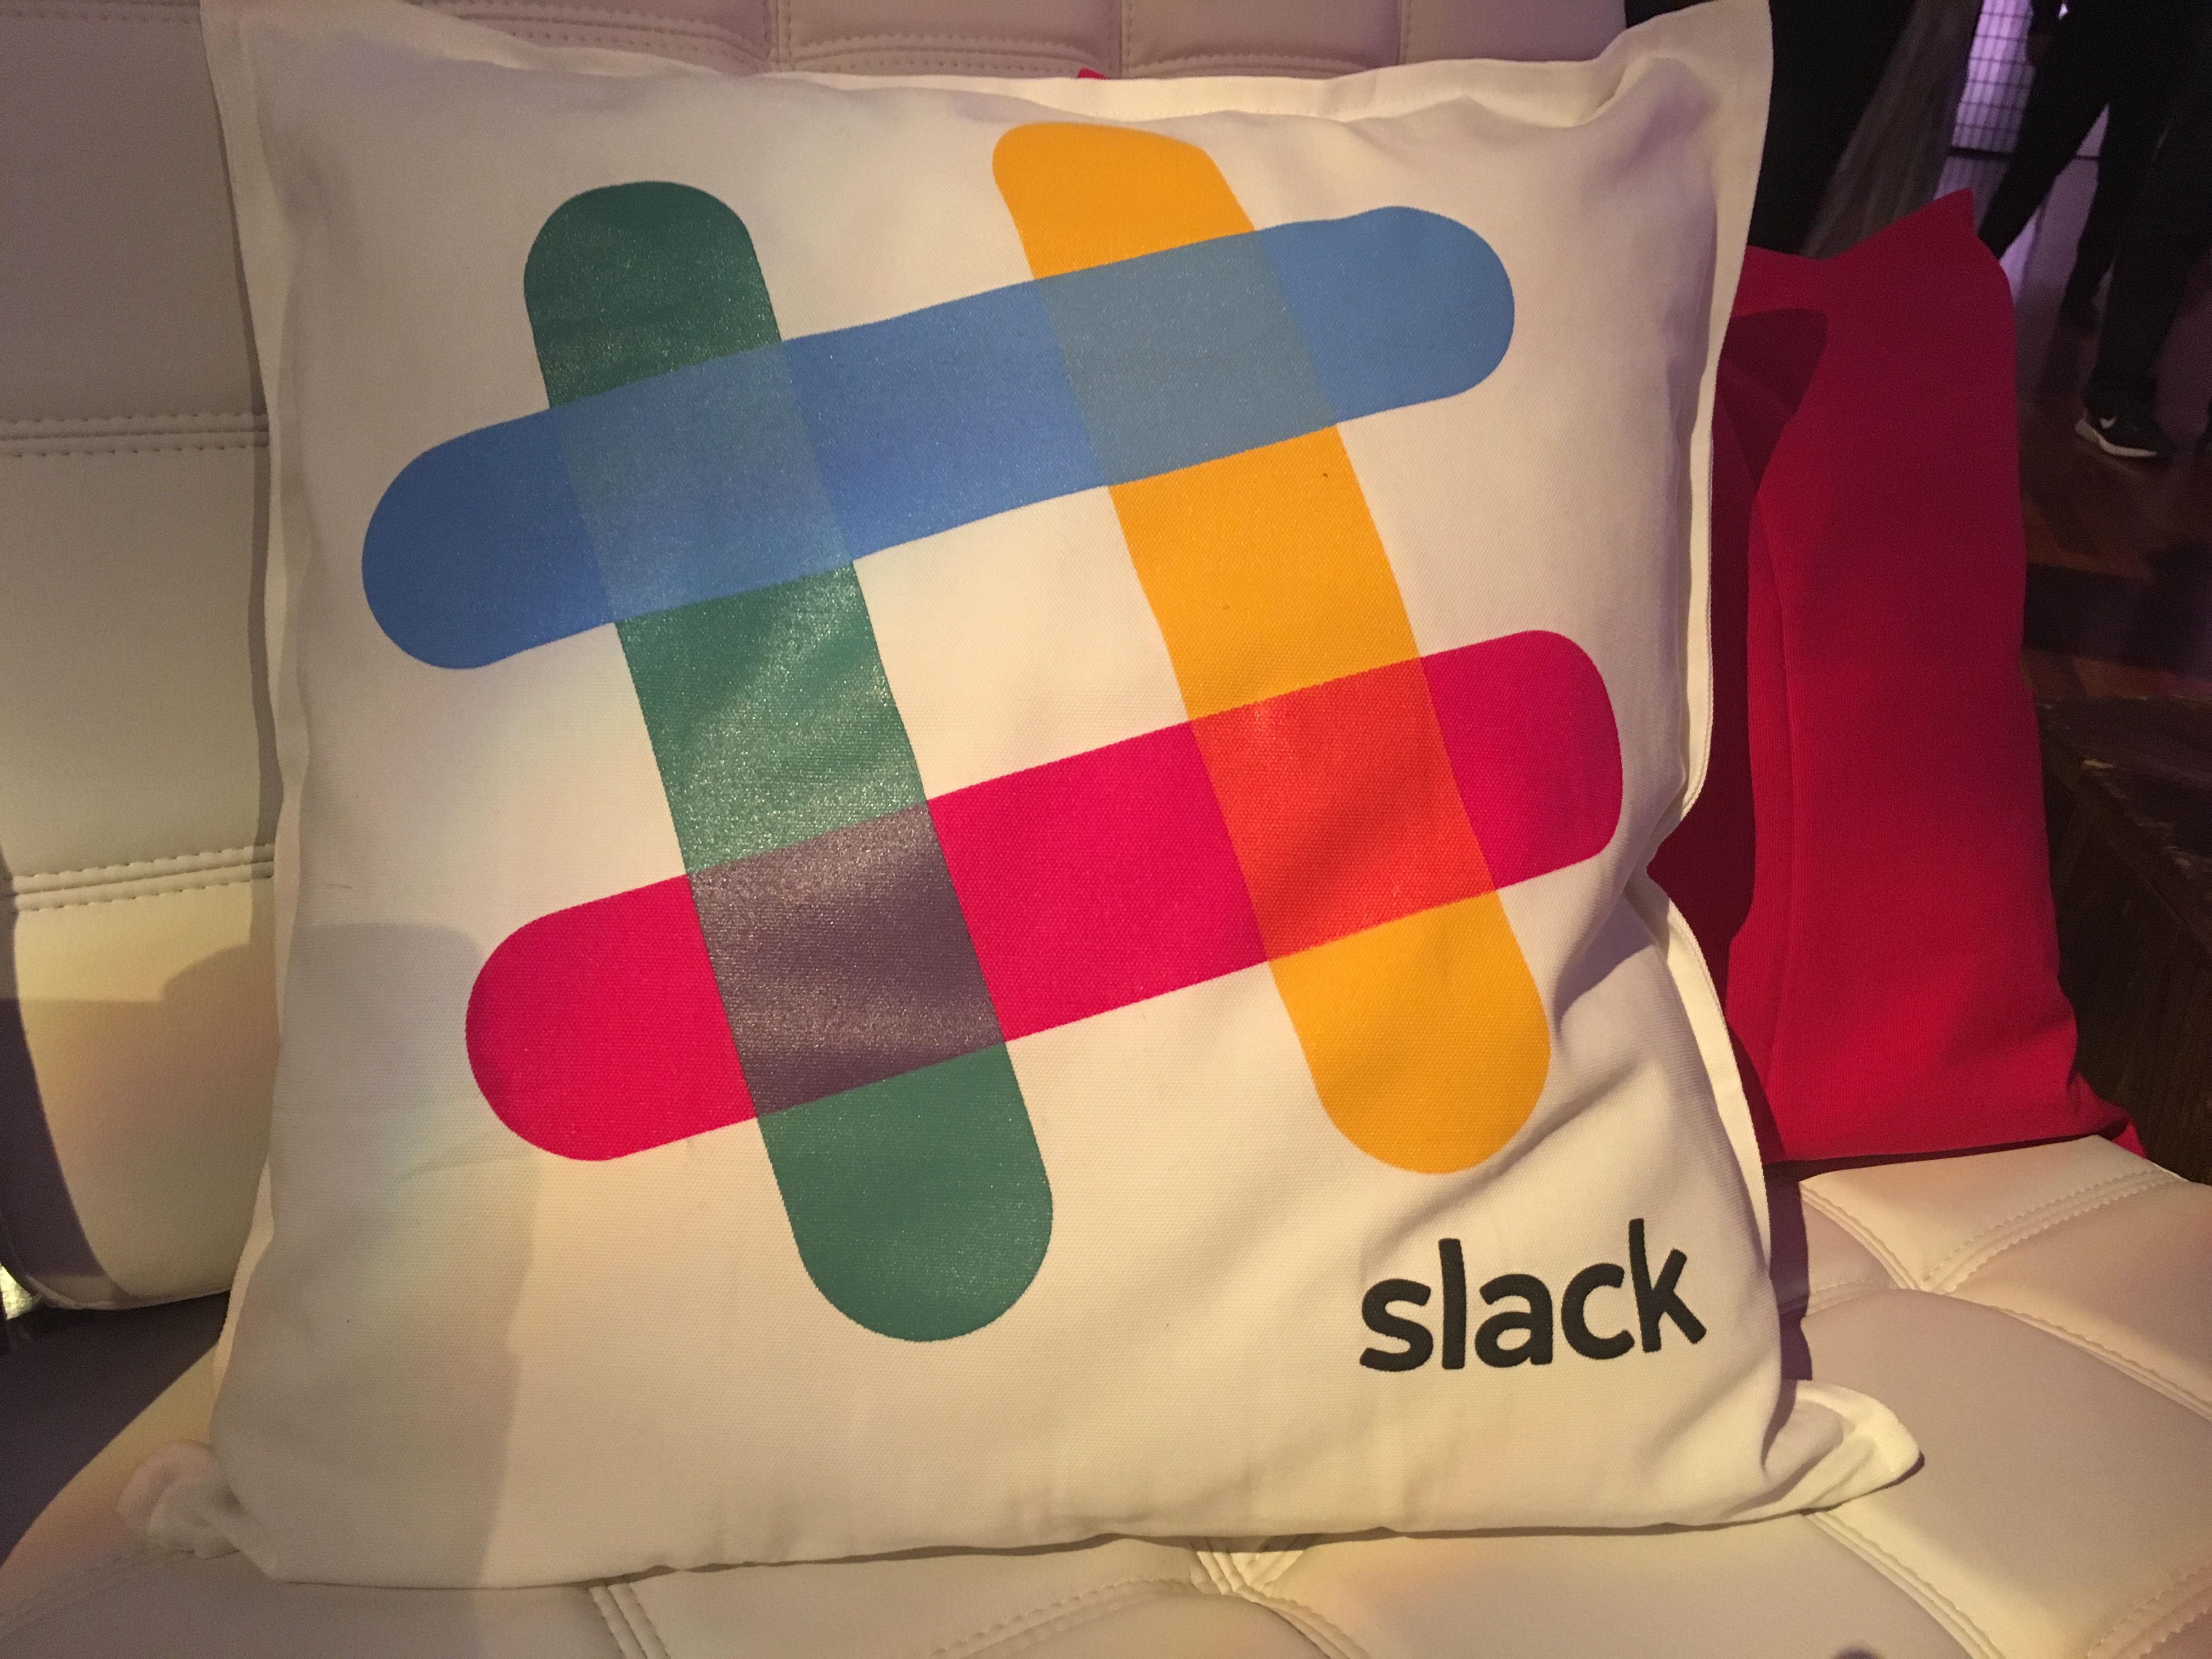 A Slack pillow at a Slack event in San Francisco on December 15.